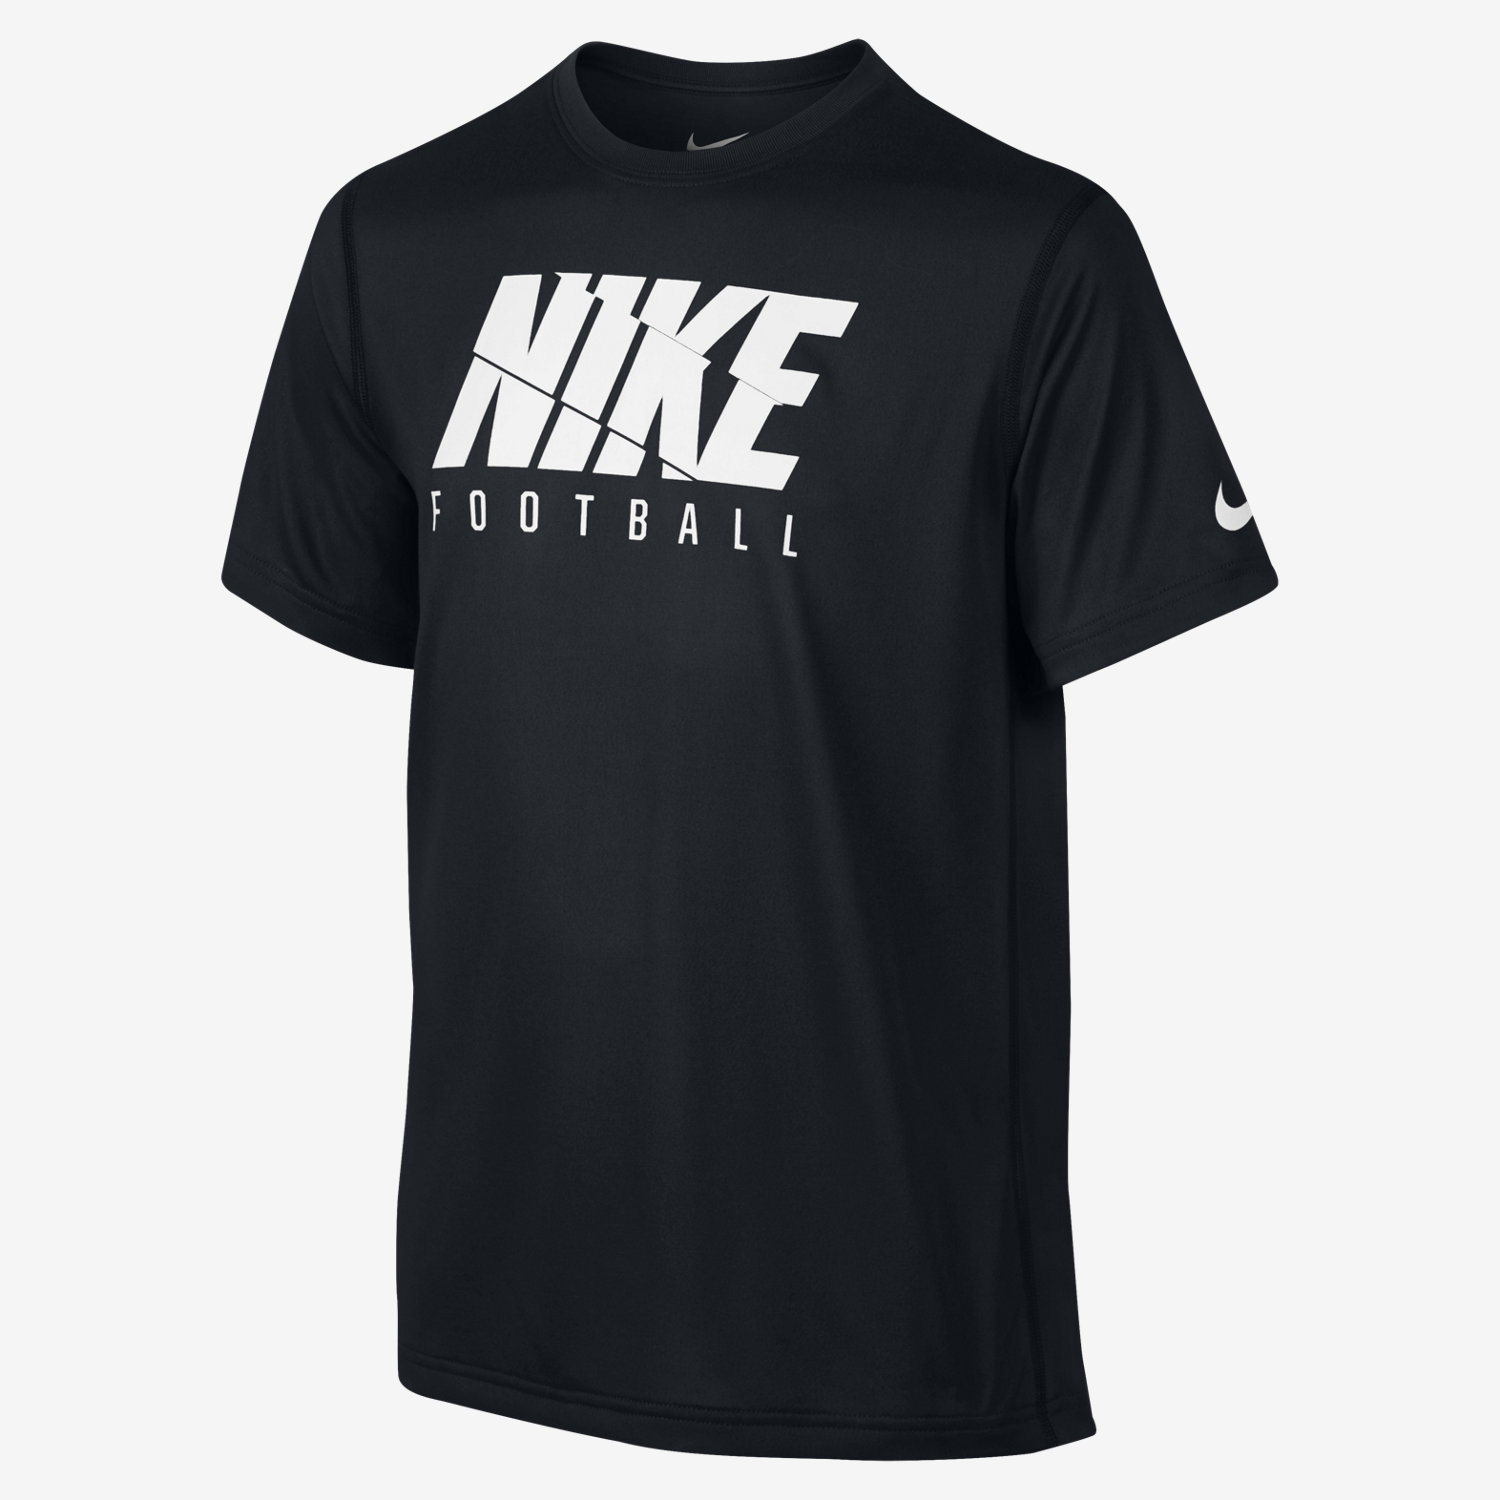 Nike Dry Football - Older Kids' (Boys') T-Shirt